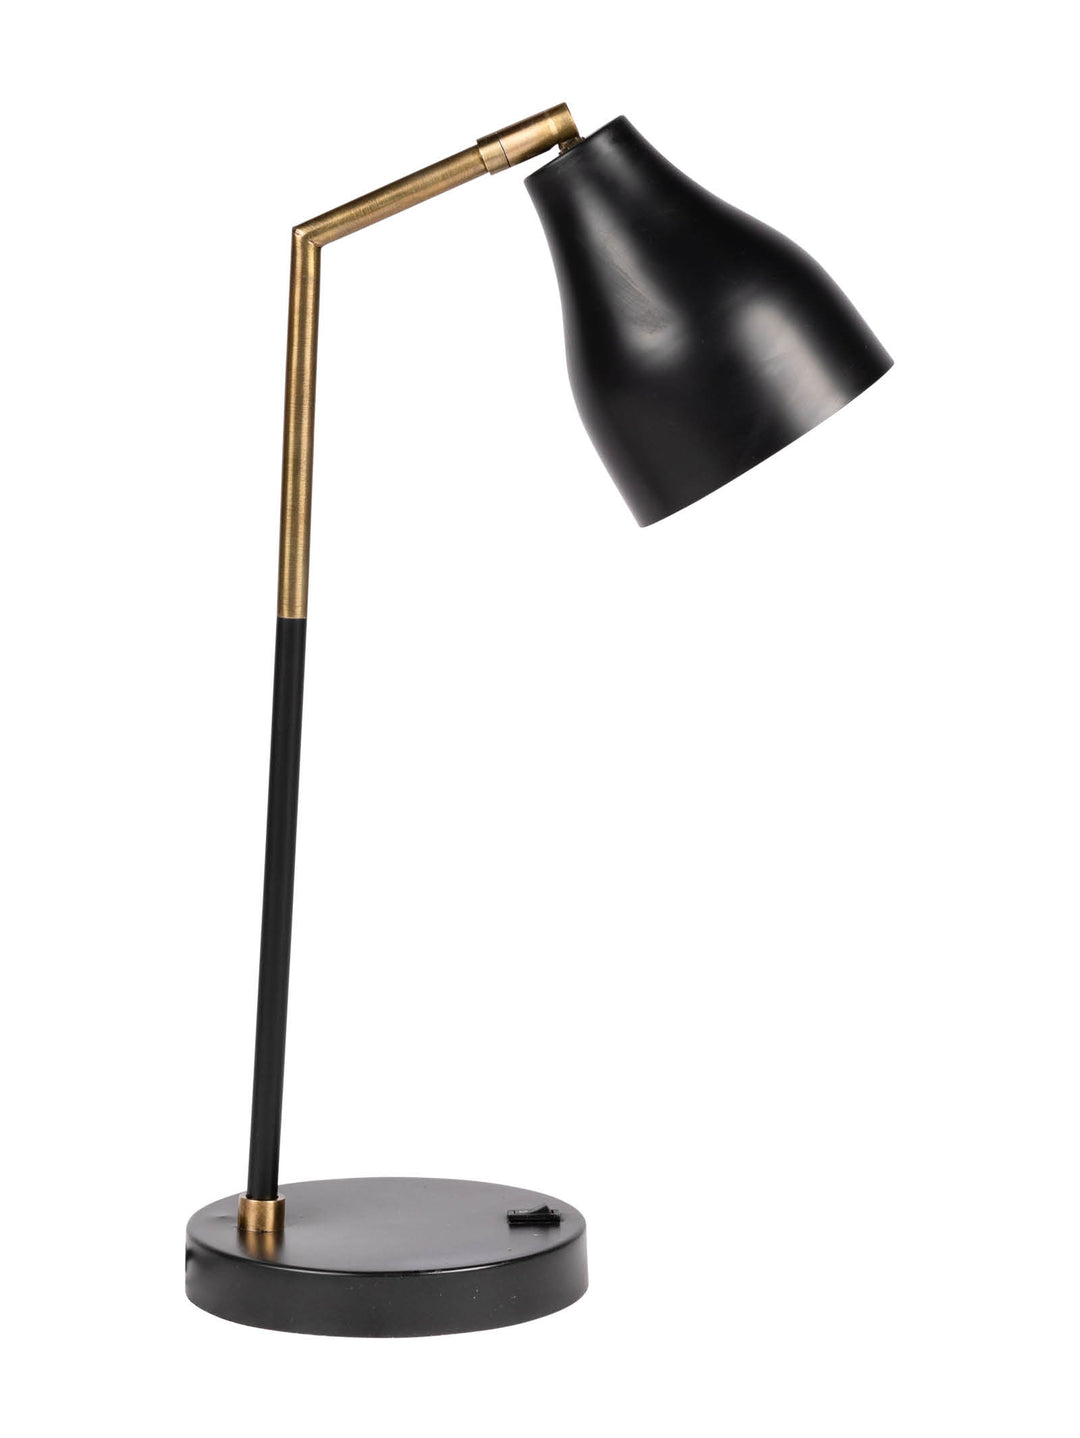 Santorini Desk Lamp in Nightshade